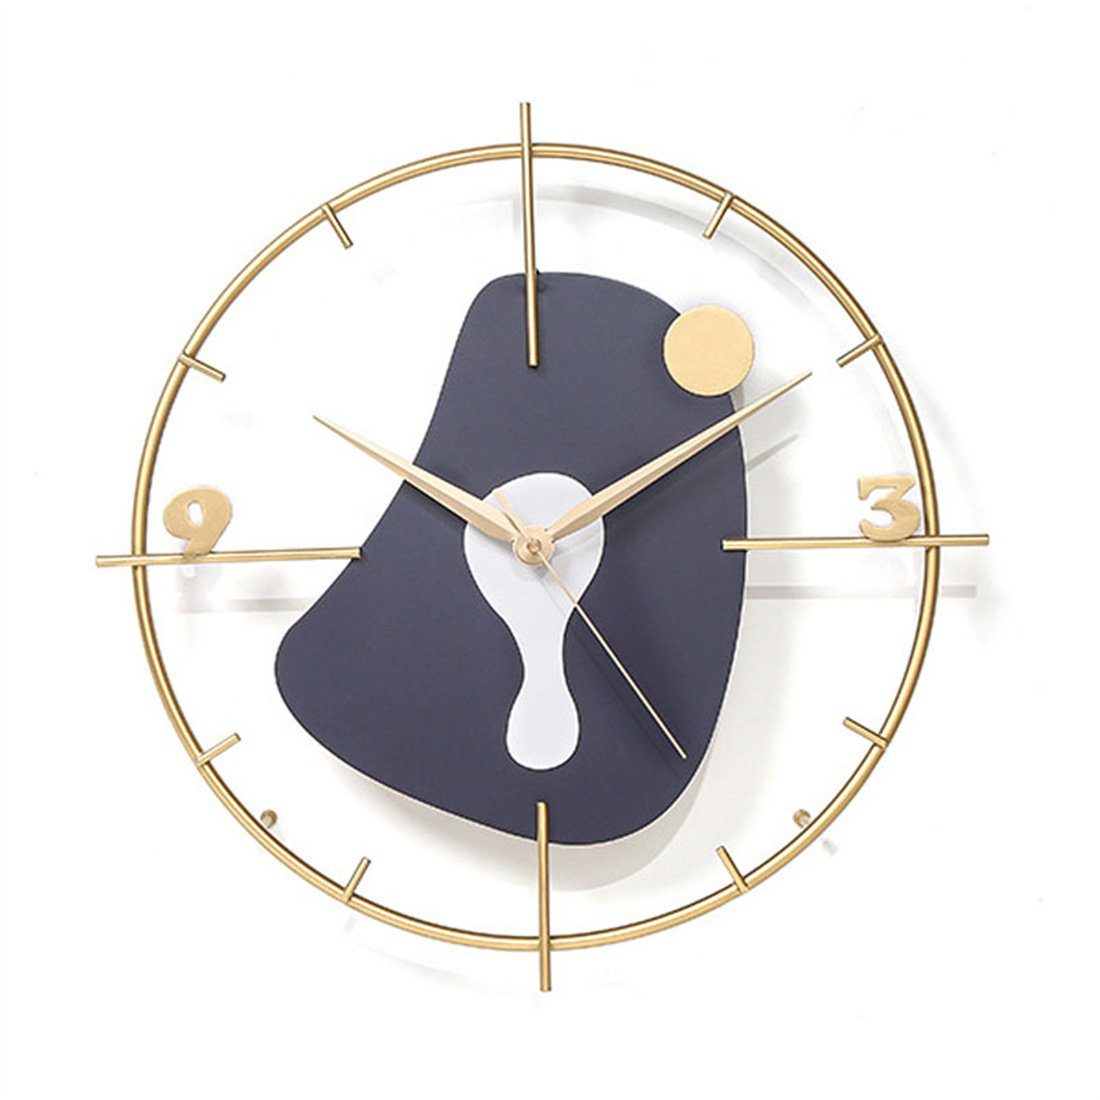 einfache Wanduhr 46cm DÖRÖY Wanduhr stille Uhr,dekorative Moderne Wanduhr, stilvolle